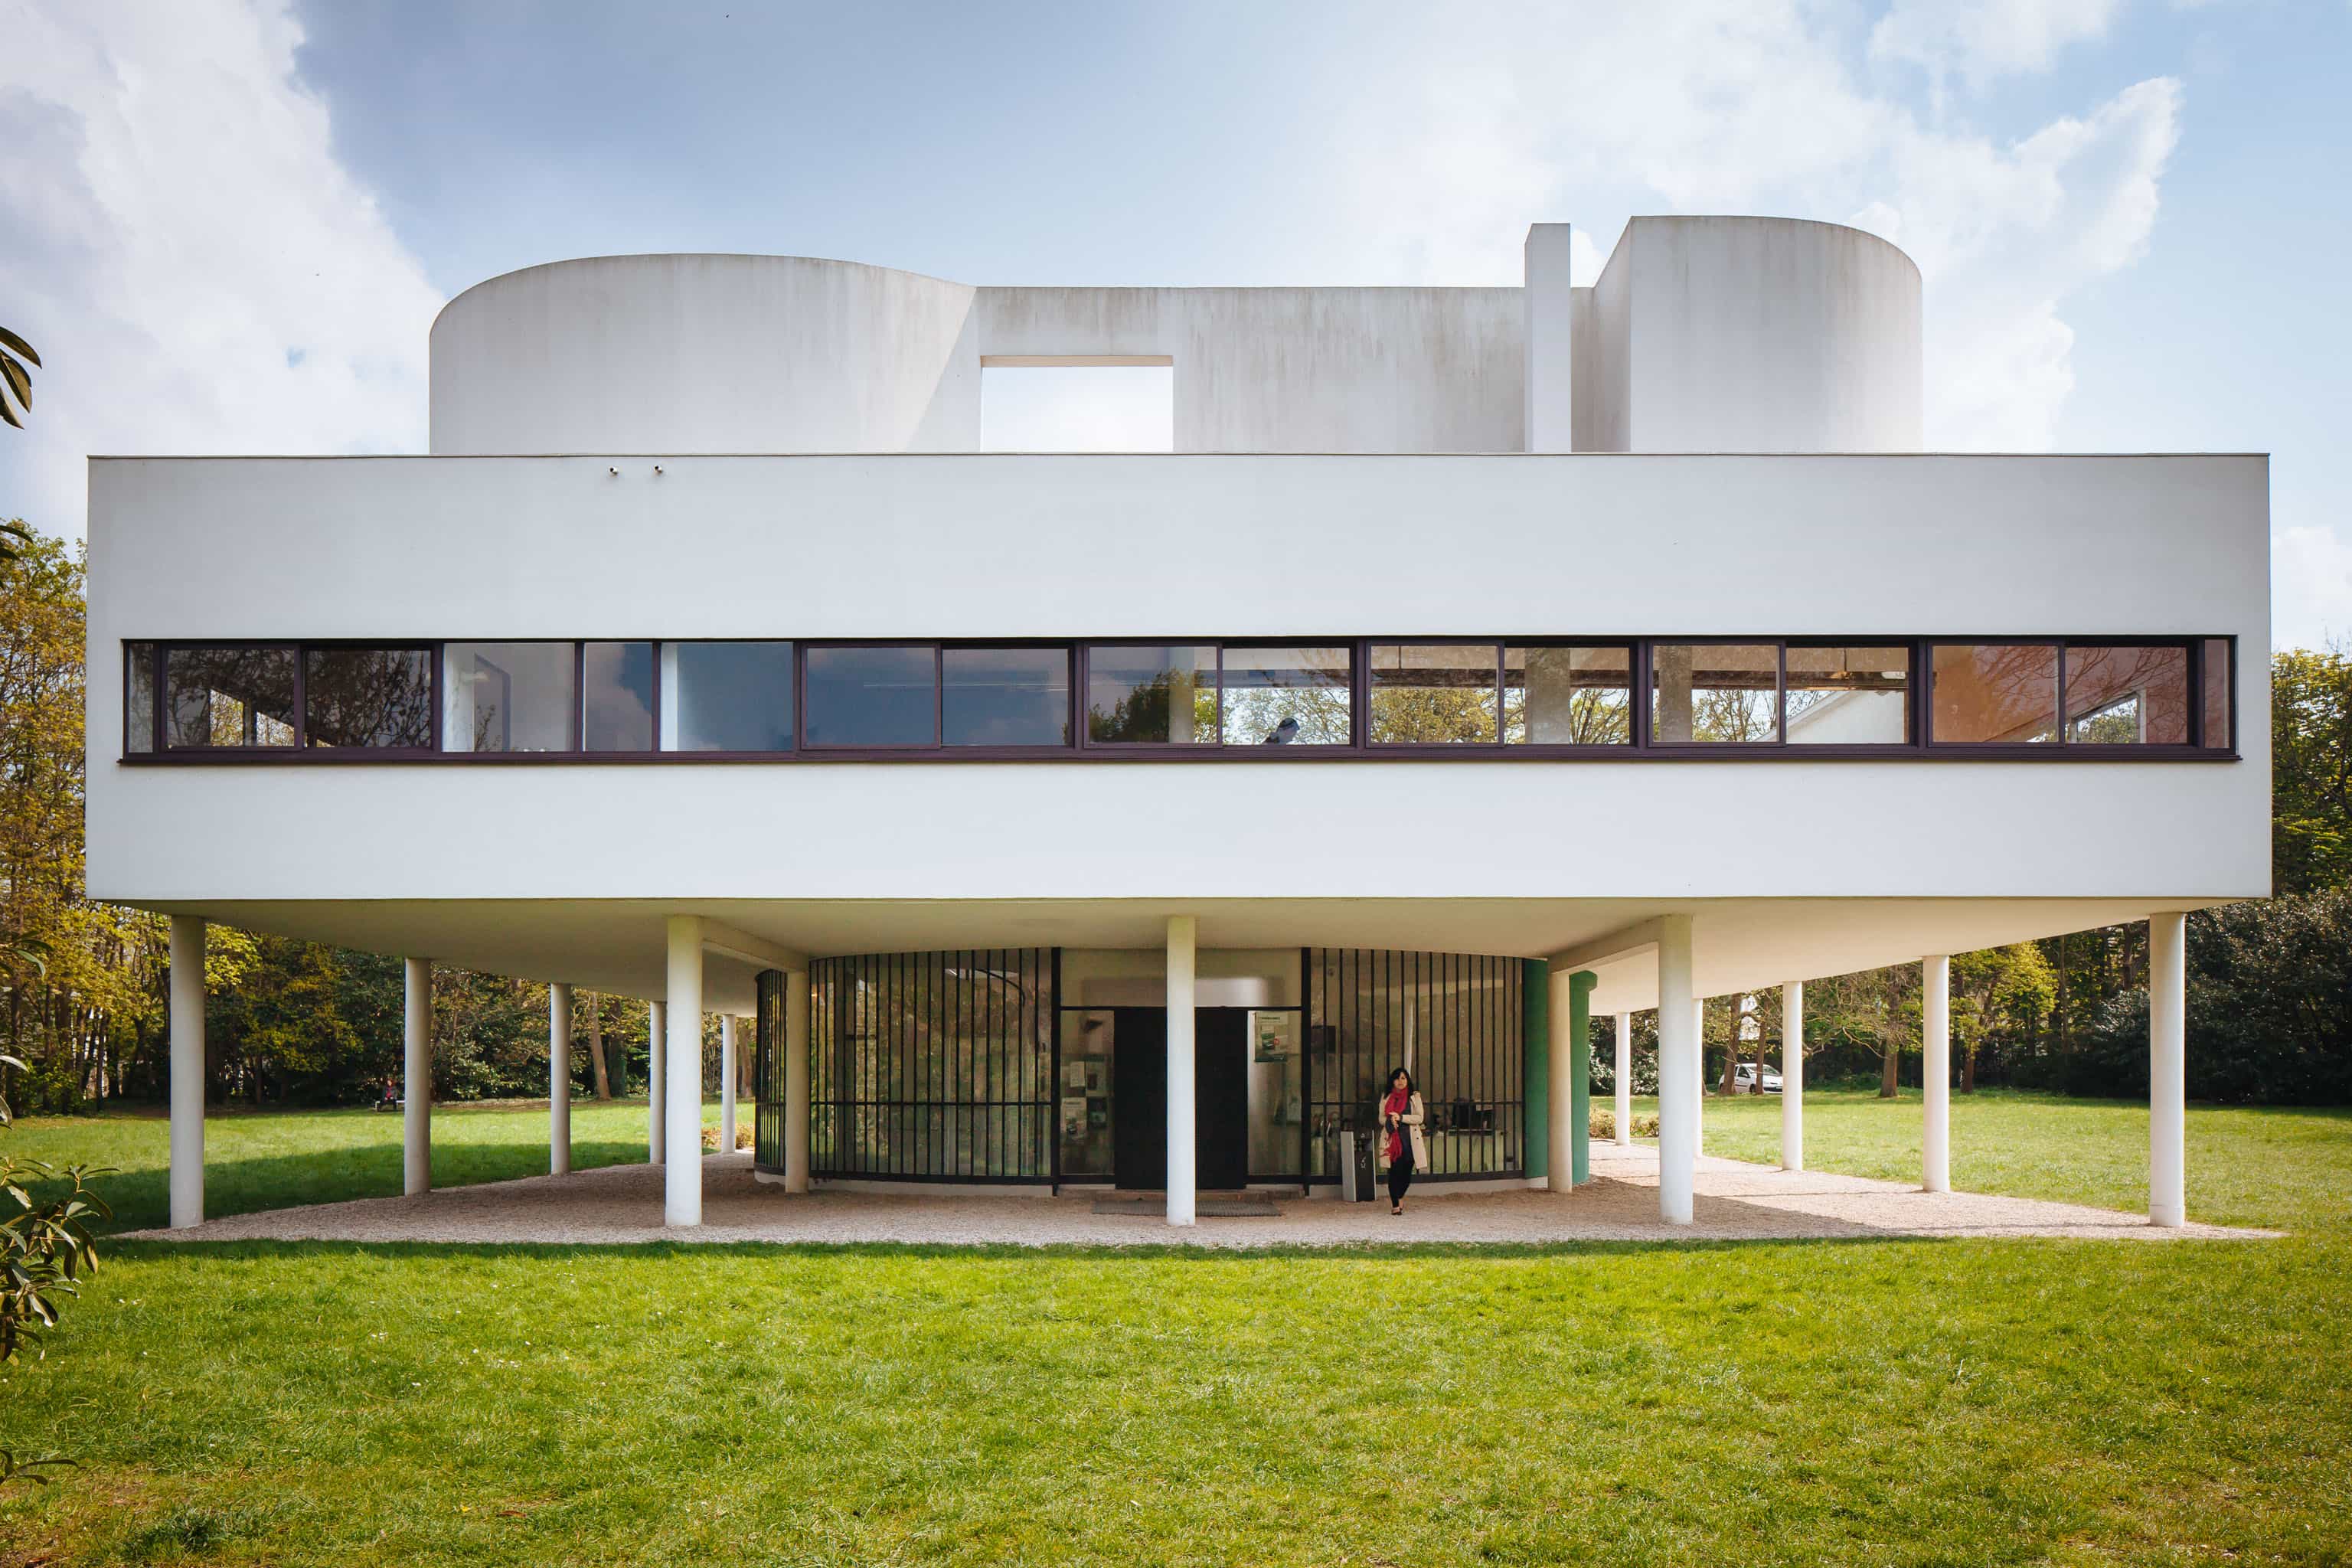 Le Corbusier Villa Savoye Part 1 History Le Corbusier | Images and ...